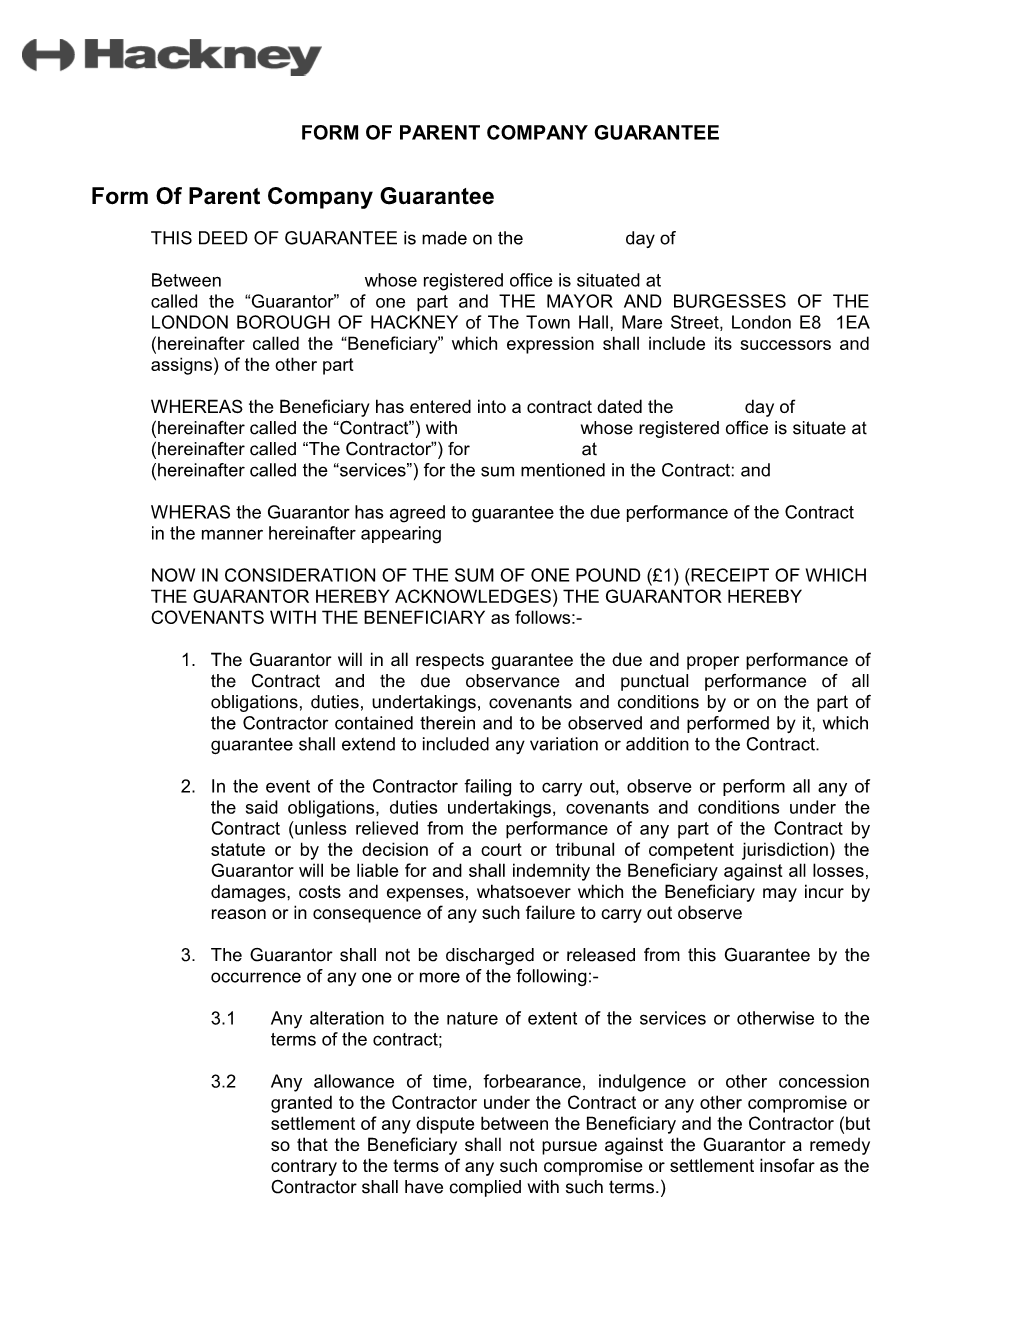 Form of Parent Company Guarantee